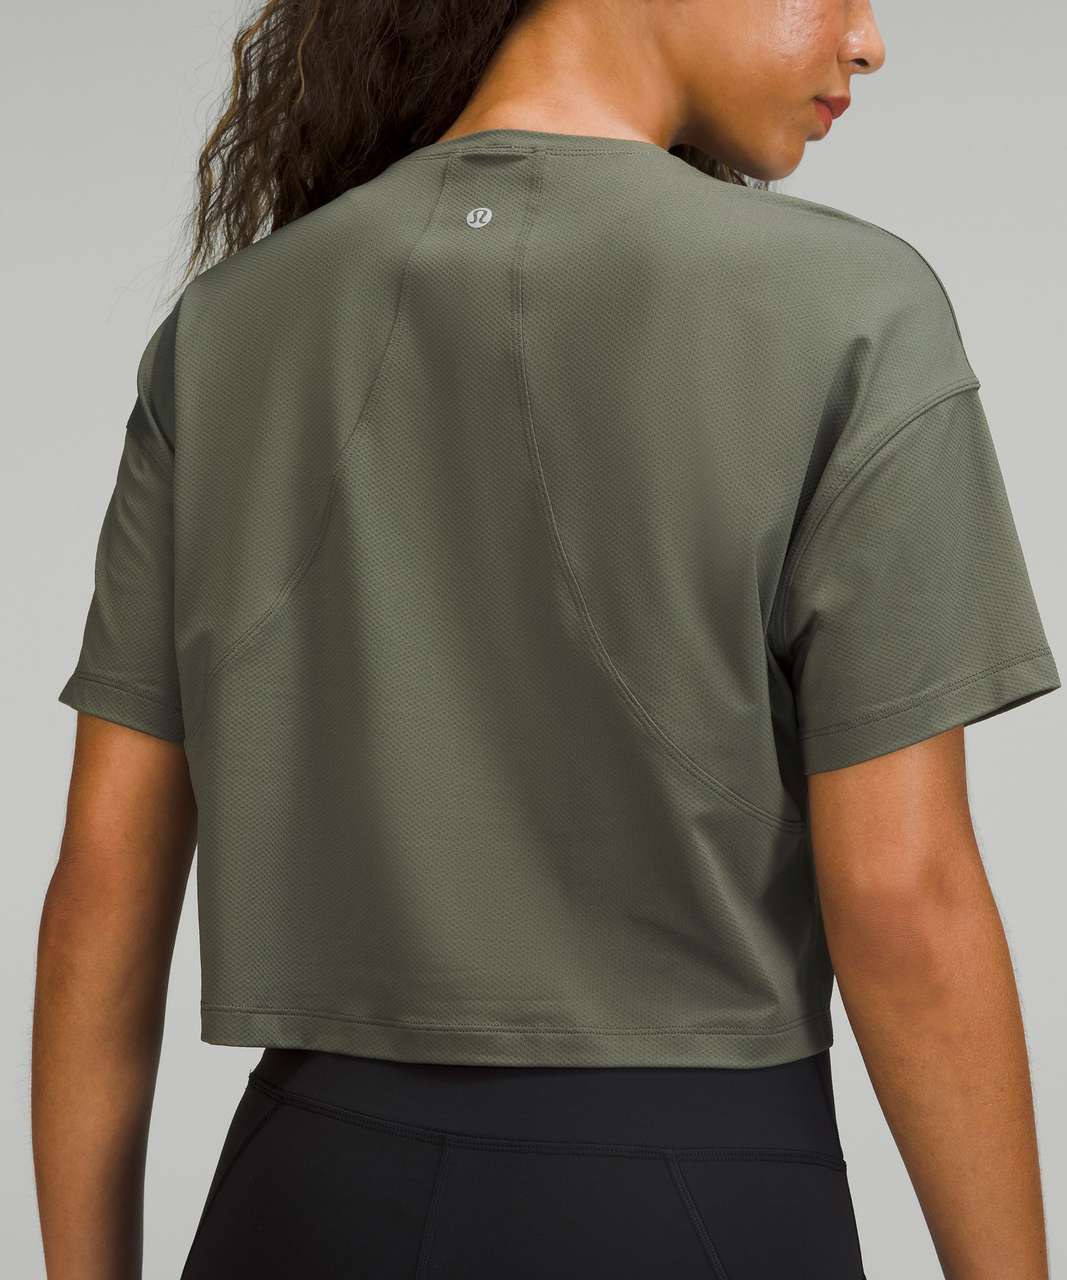 Lululemon Abrasion-Resistant Training T-Shirt - Carob Brown